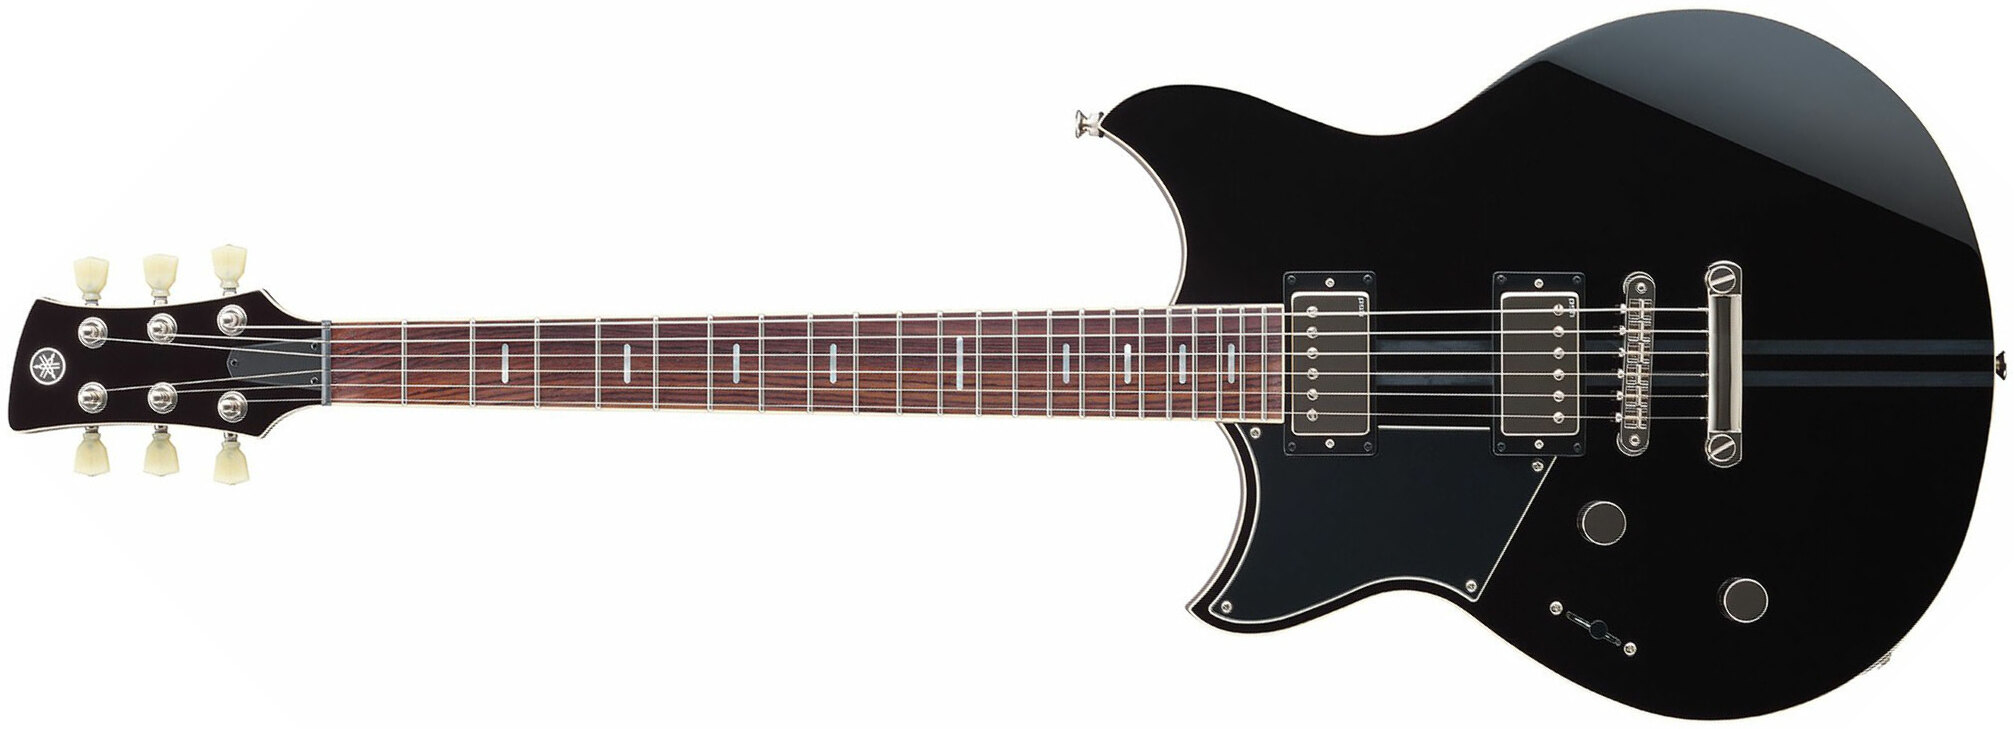 Yamaha Rss20l Revstar Standard Lh Gaucher Hh Ht Rw - Black - Left-handed electric guitar - Main picture